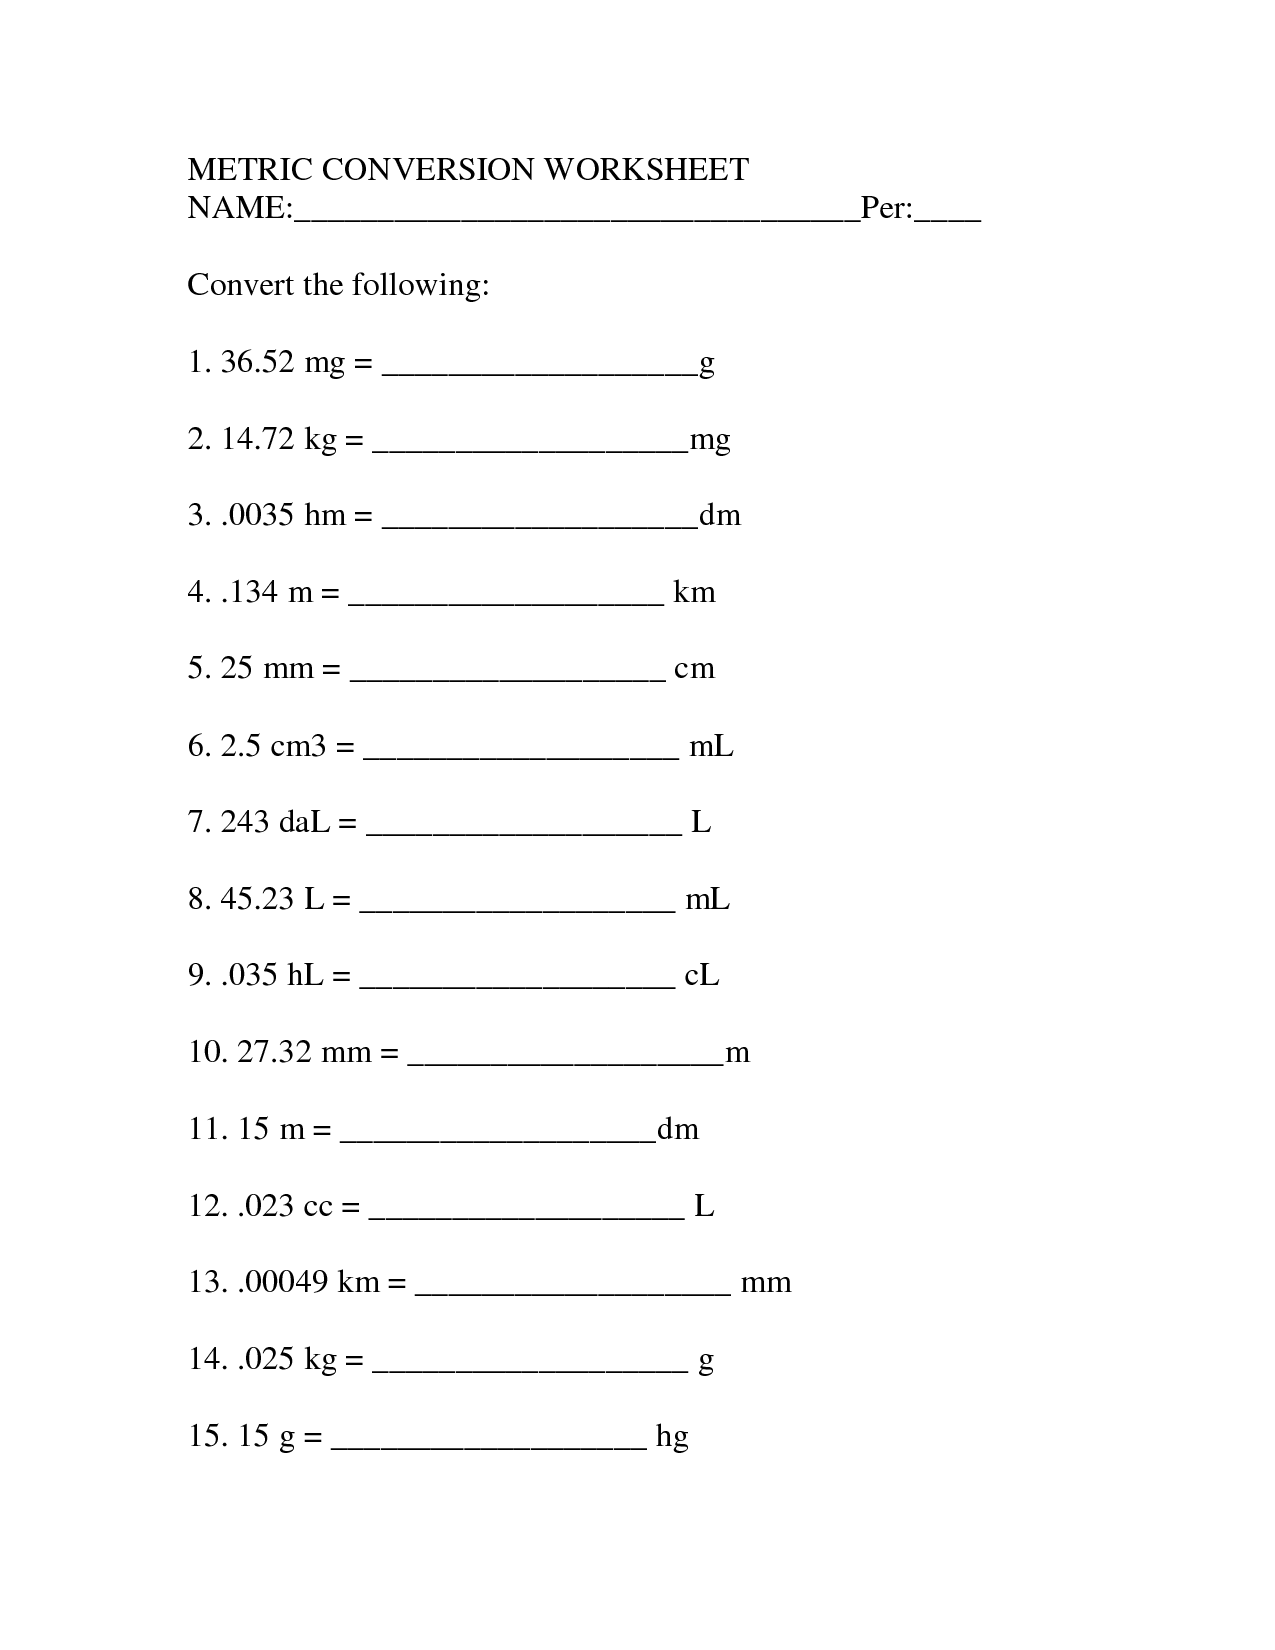 metric-prefixes-worksheet-answers